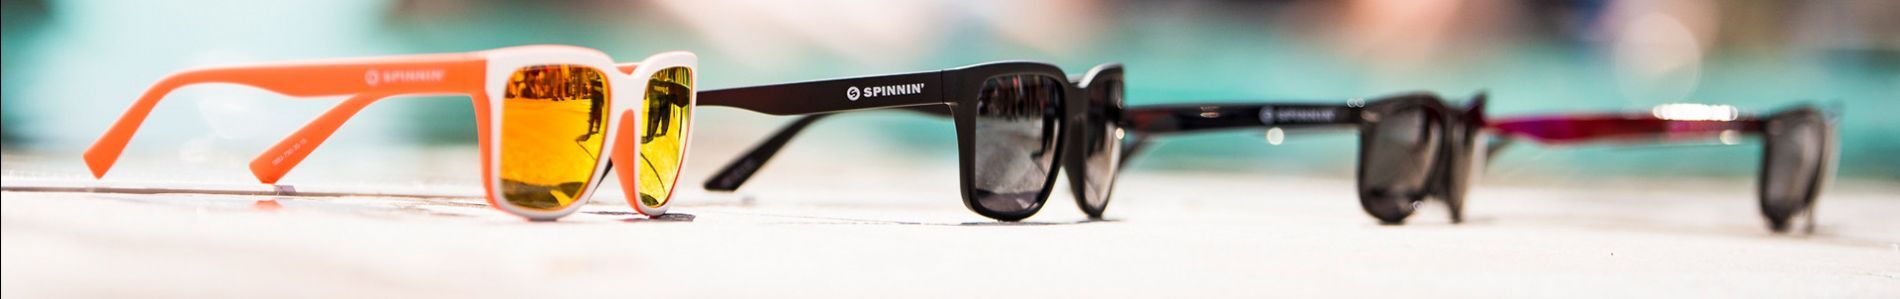 Free Spinnin' x Sinner Sunglasses